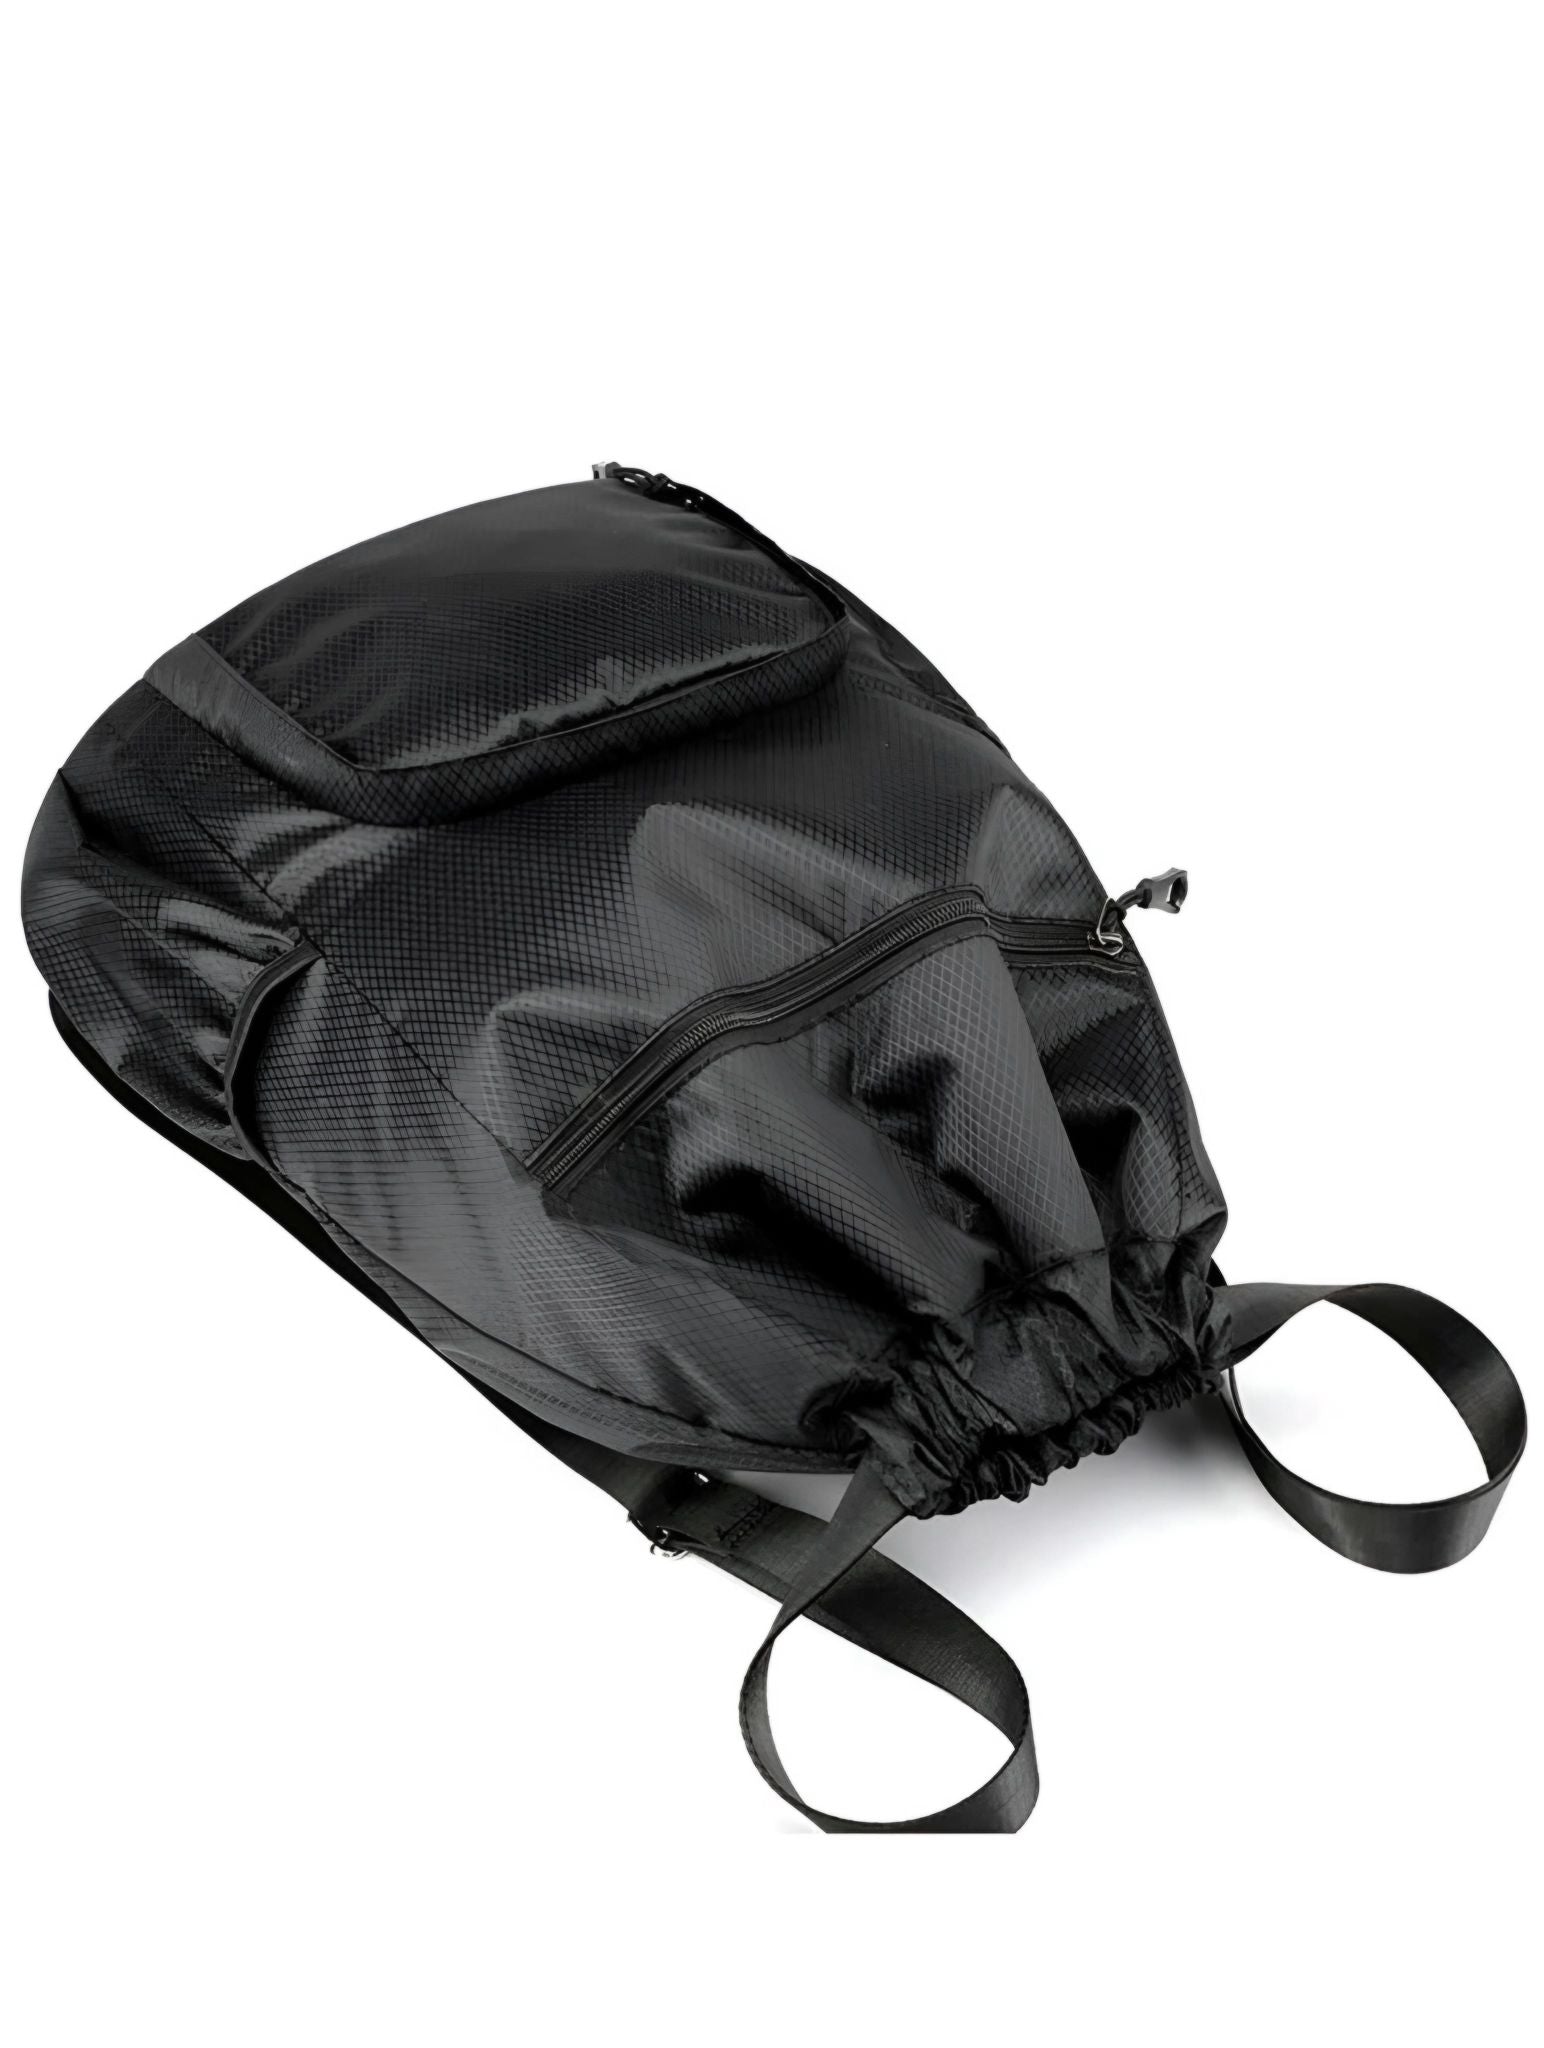  Foldable backpack